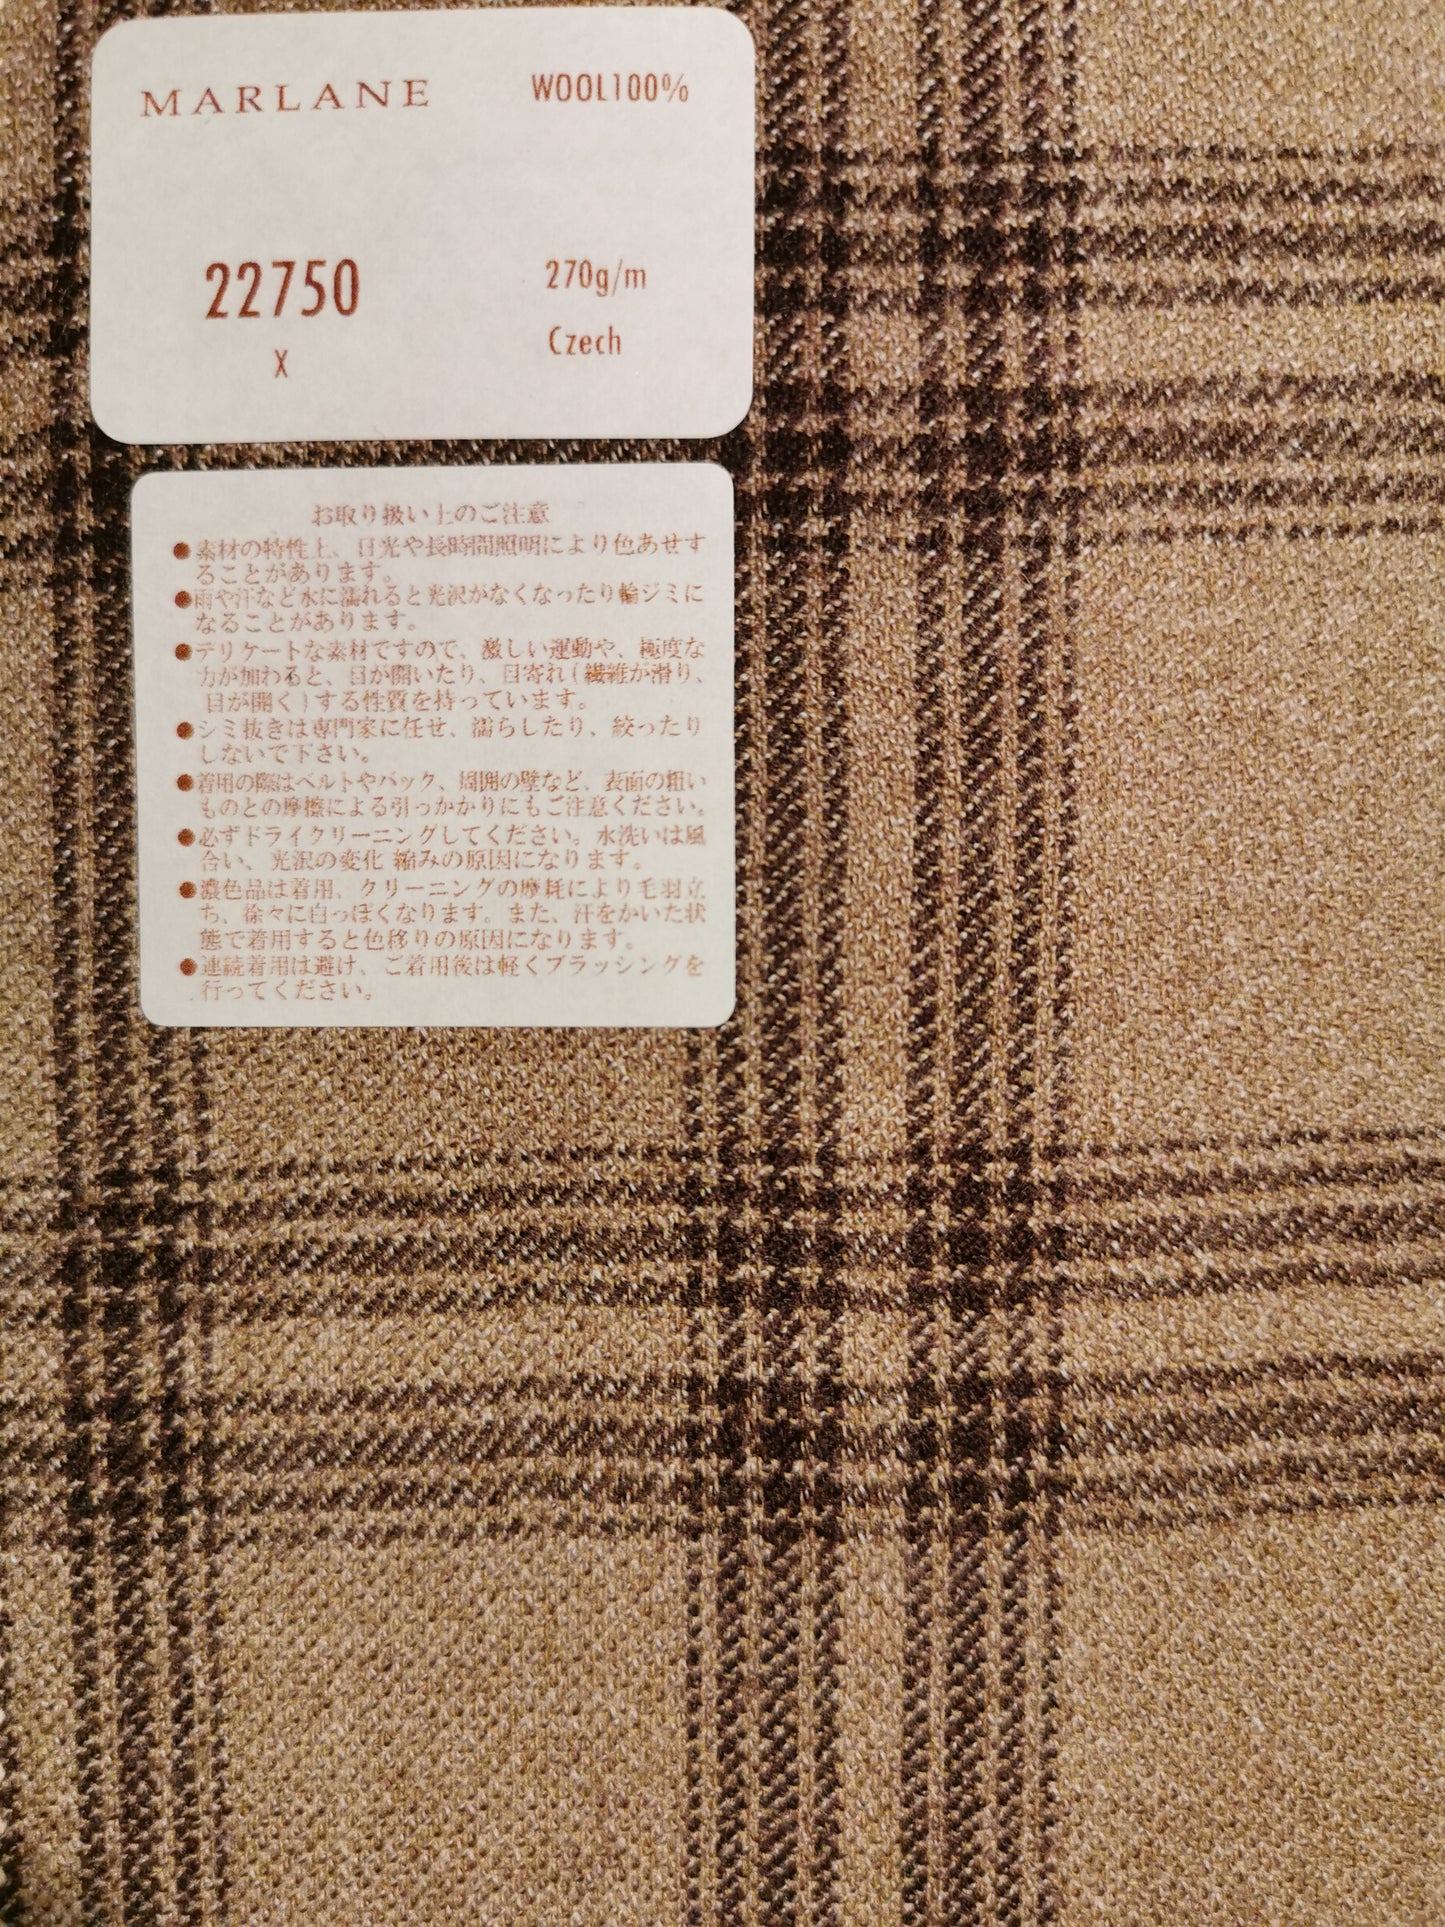 Brand : MARLANE Textile ID : 22750